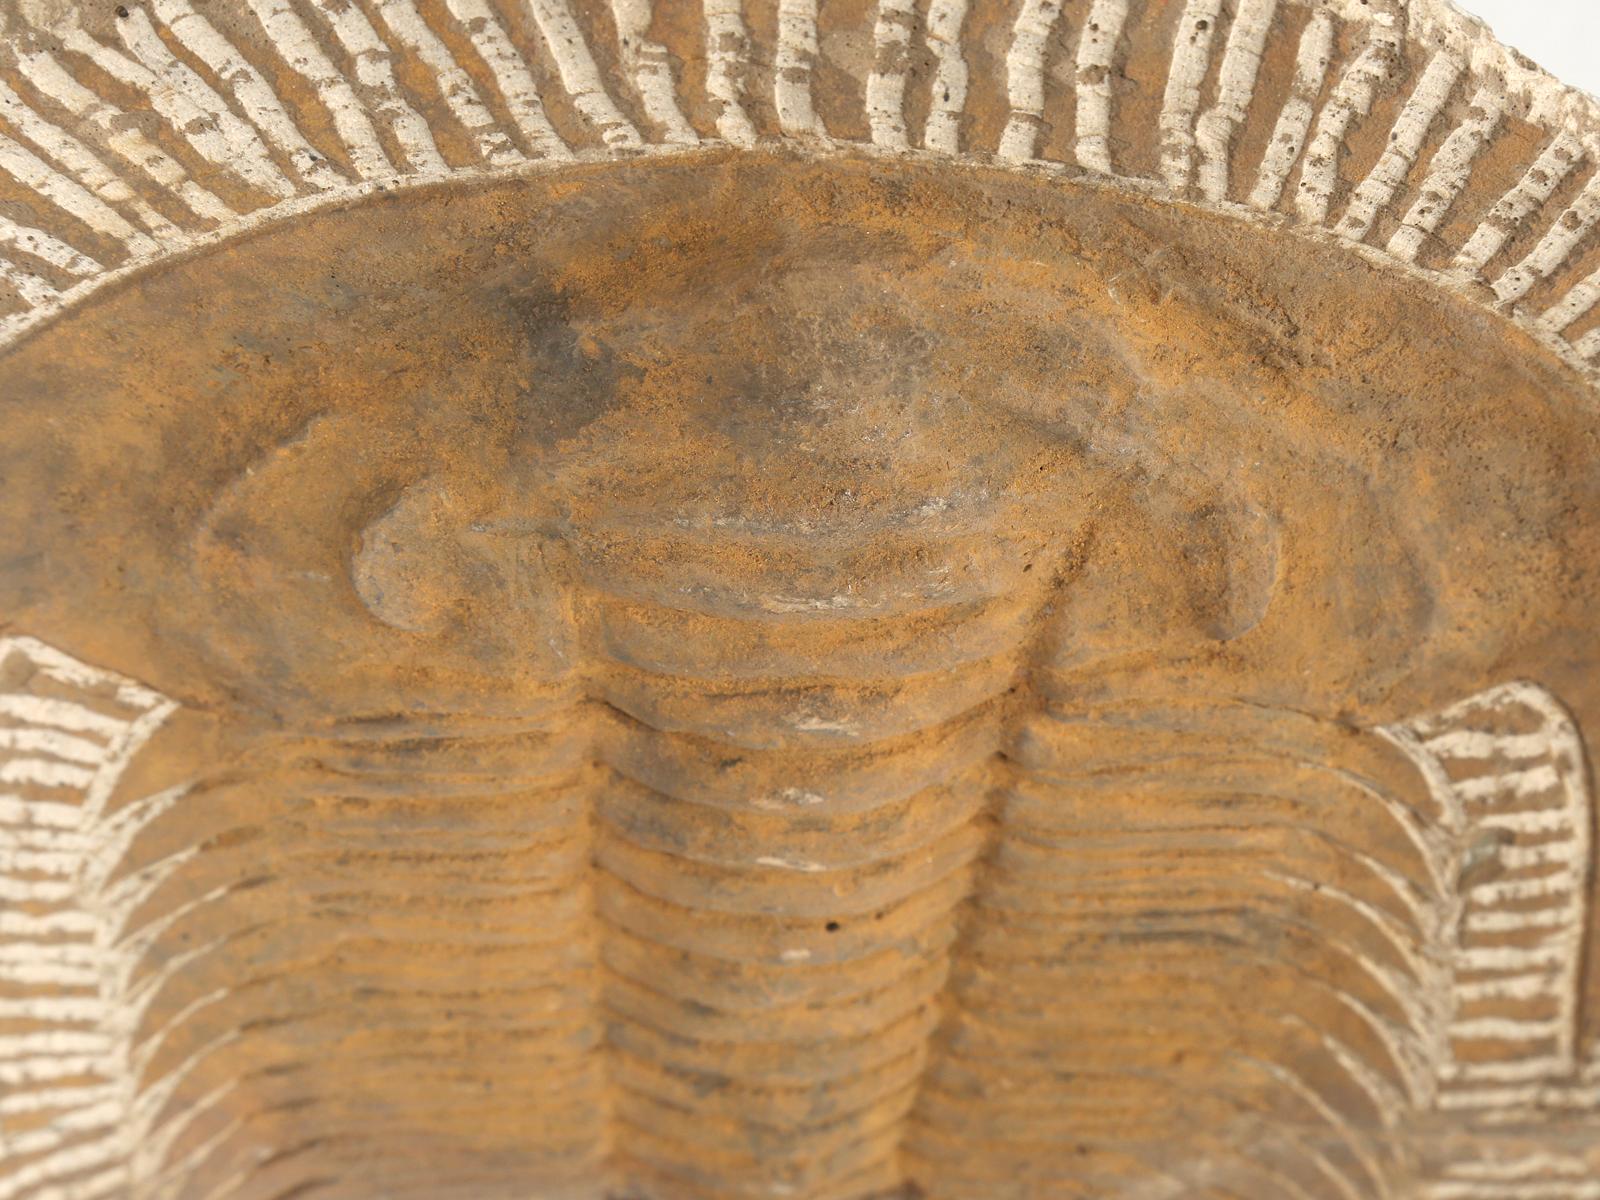 trilobite paleozoic era